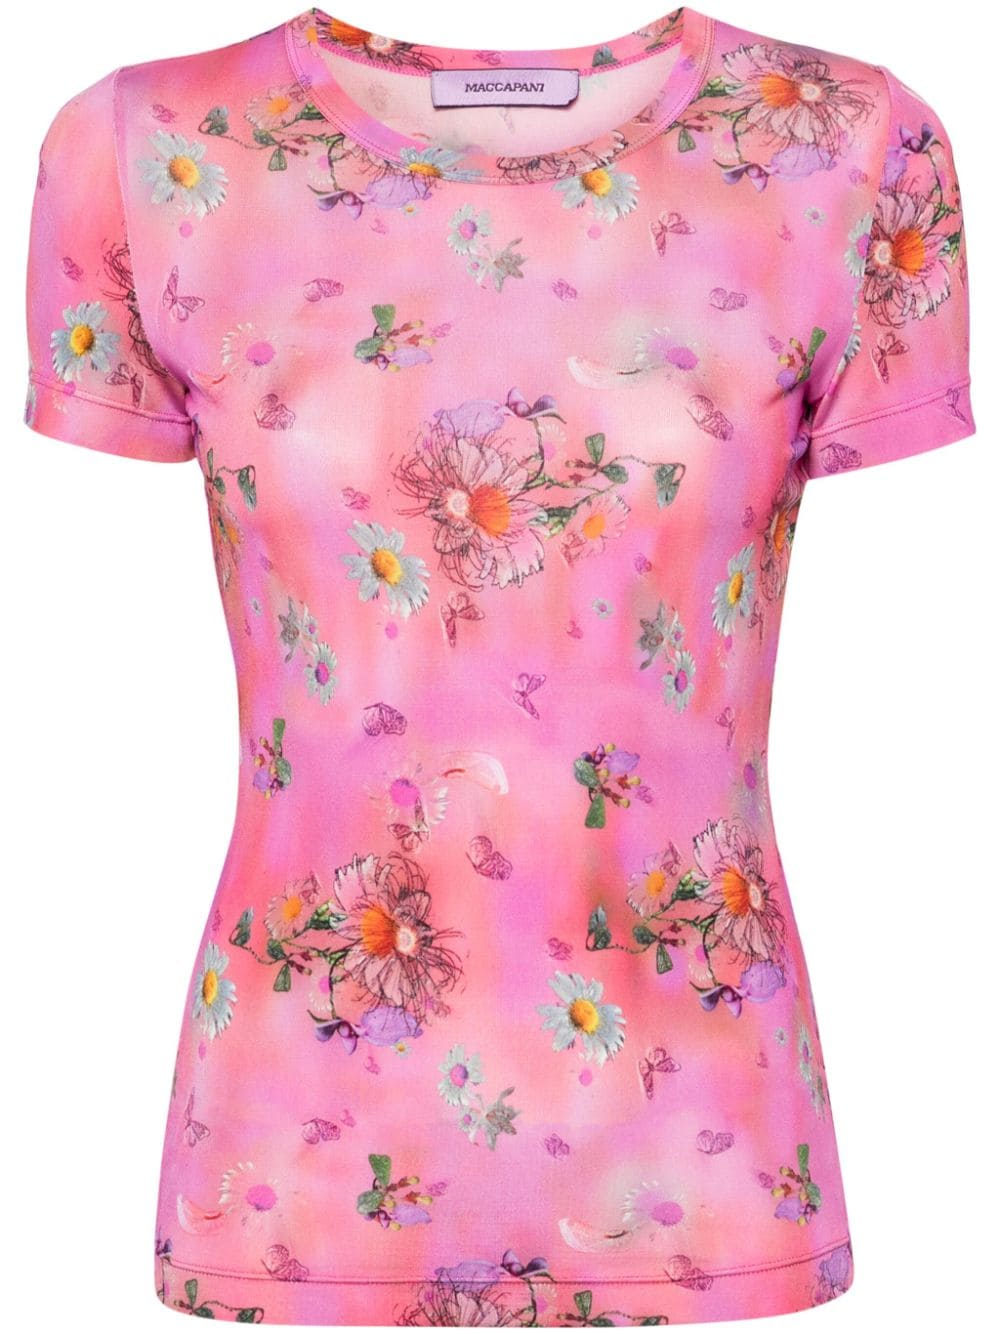 The Skimpy floral-print T-shirt